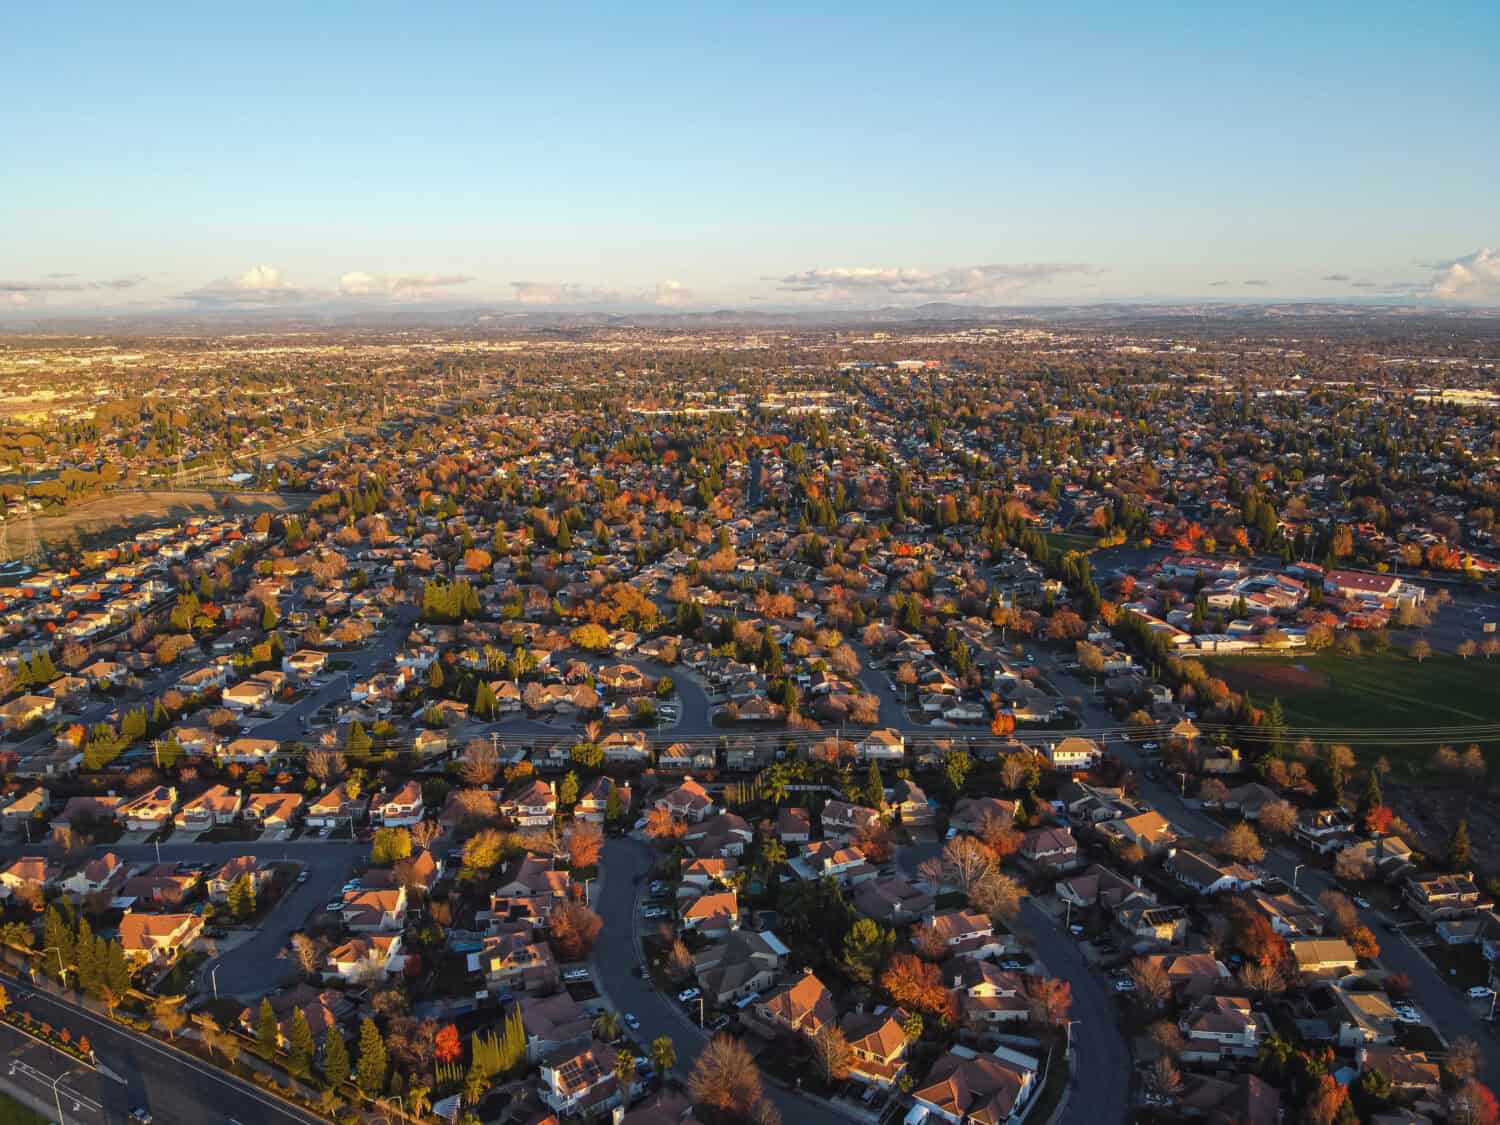 Roseville California aerial view. December 2019